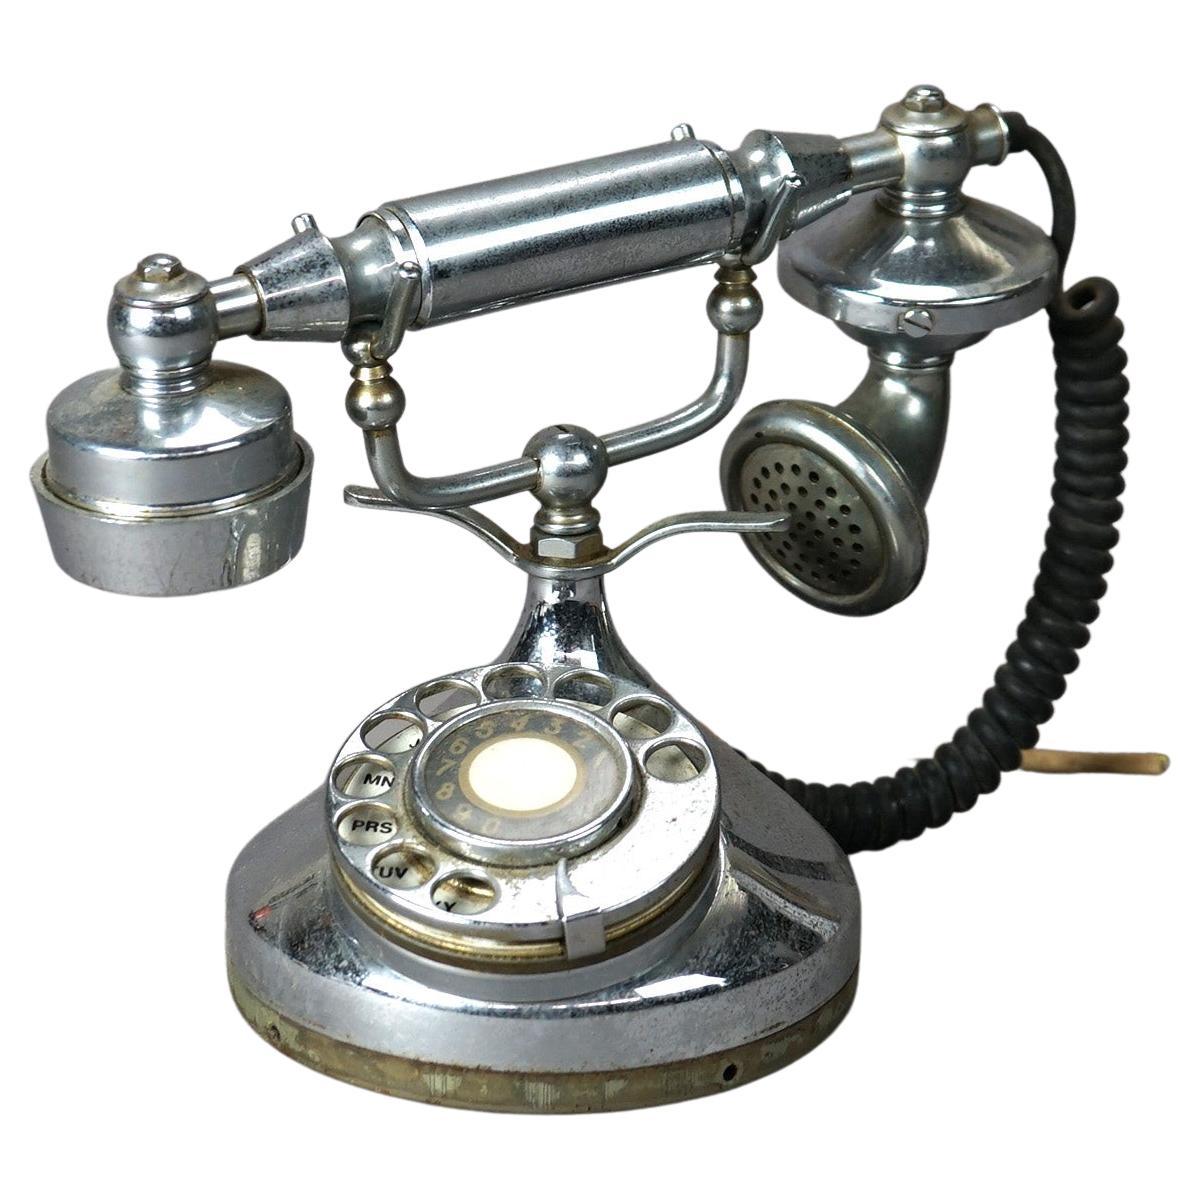 Antique Art Deco Table Top Rotary Telephone Circa 1930